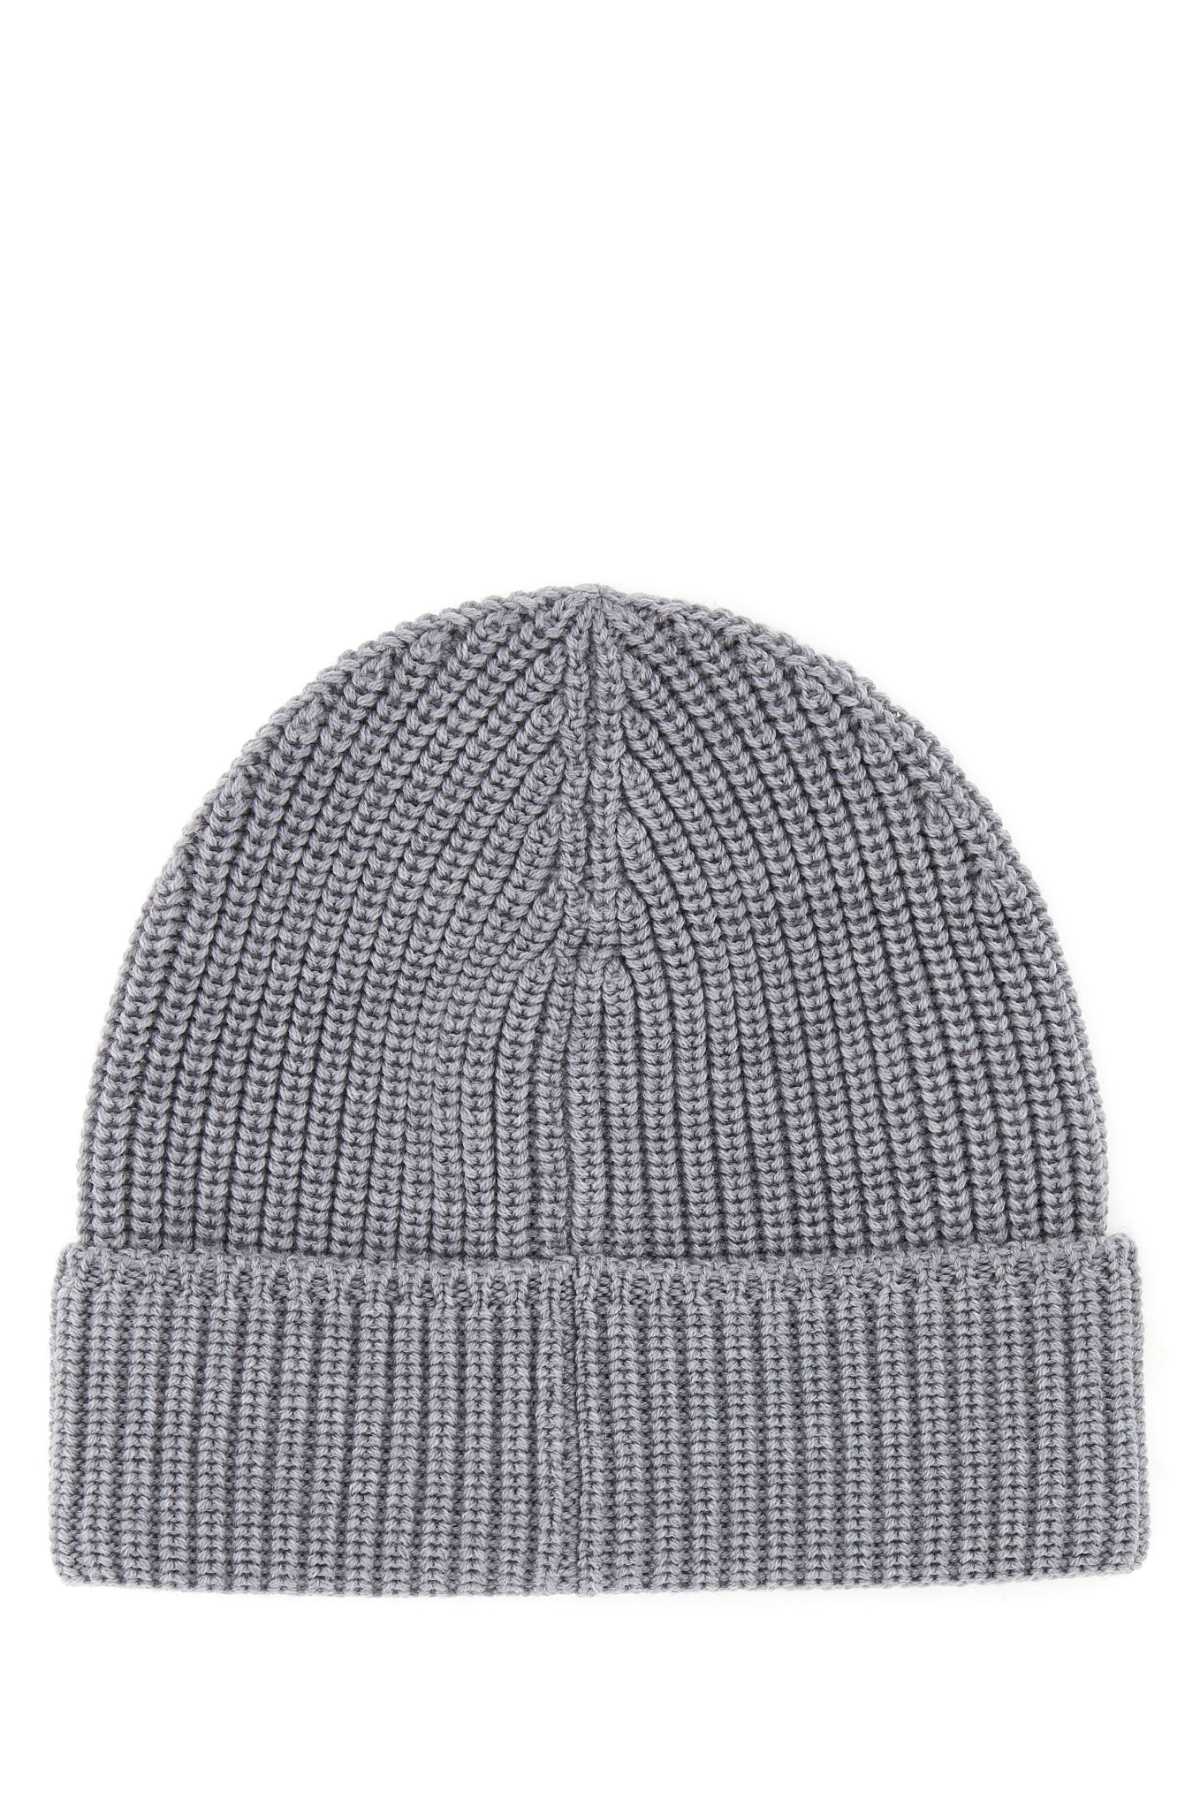 Shop Canada Goose Grey Wool Beanie Hat In 115